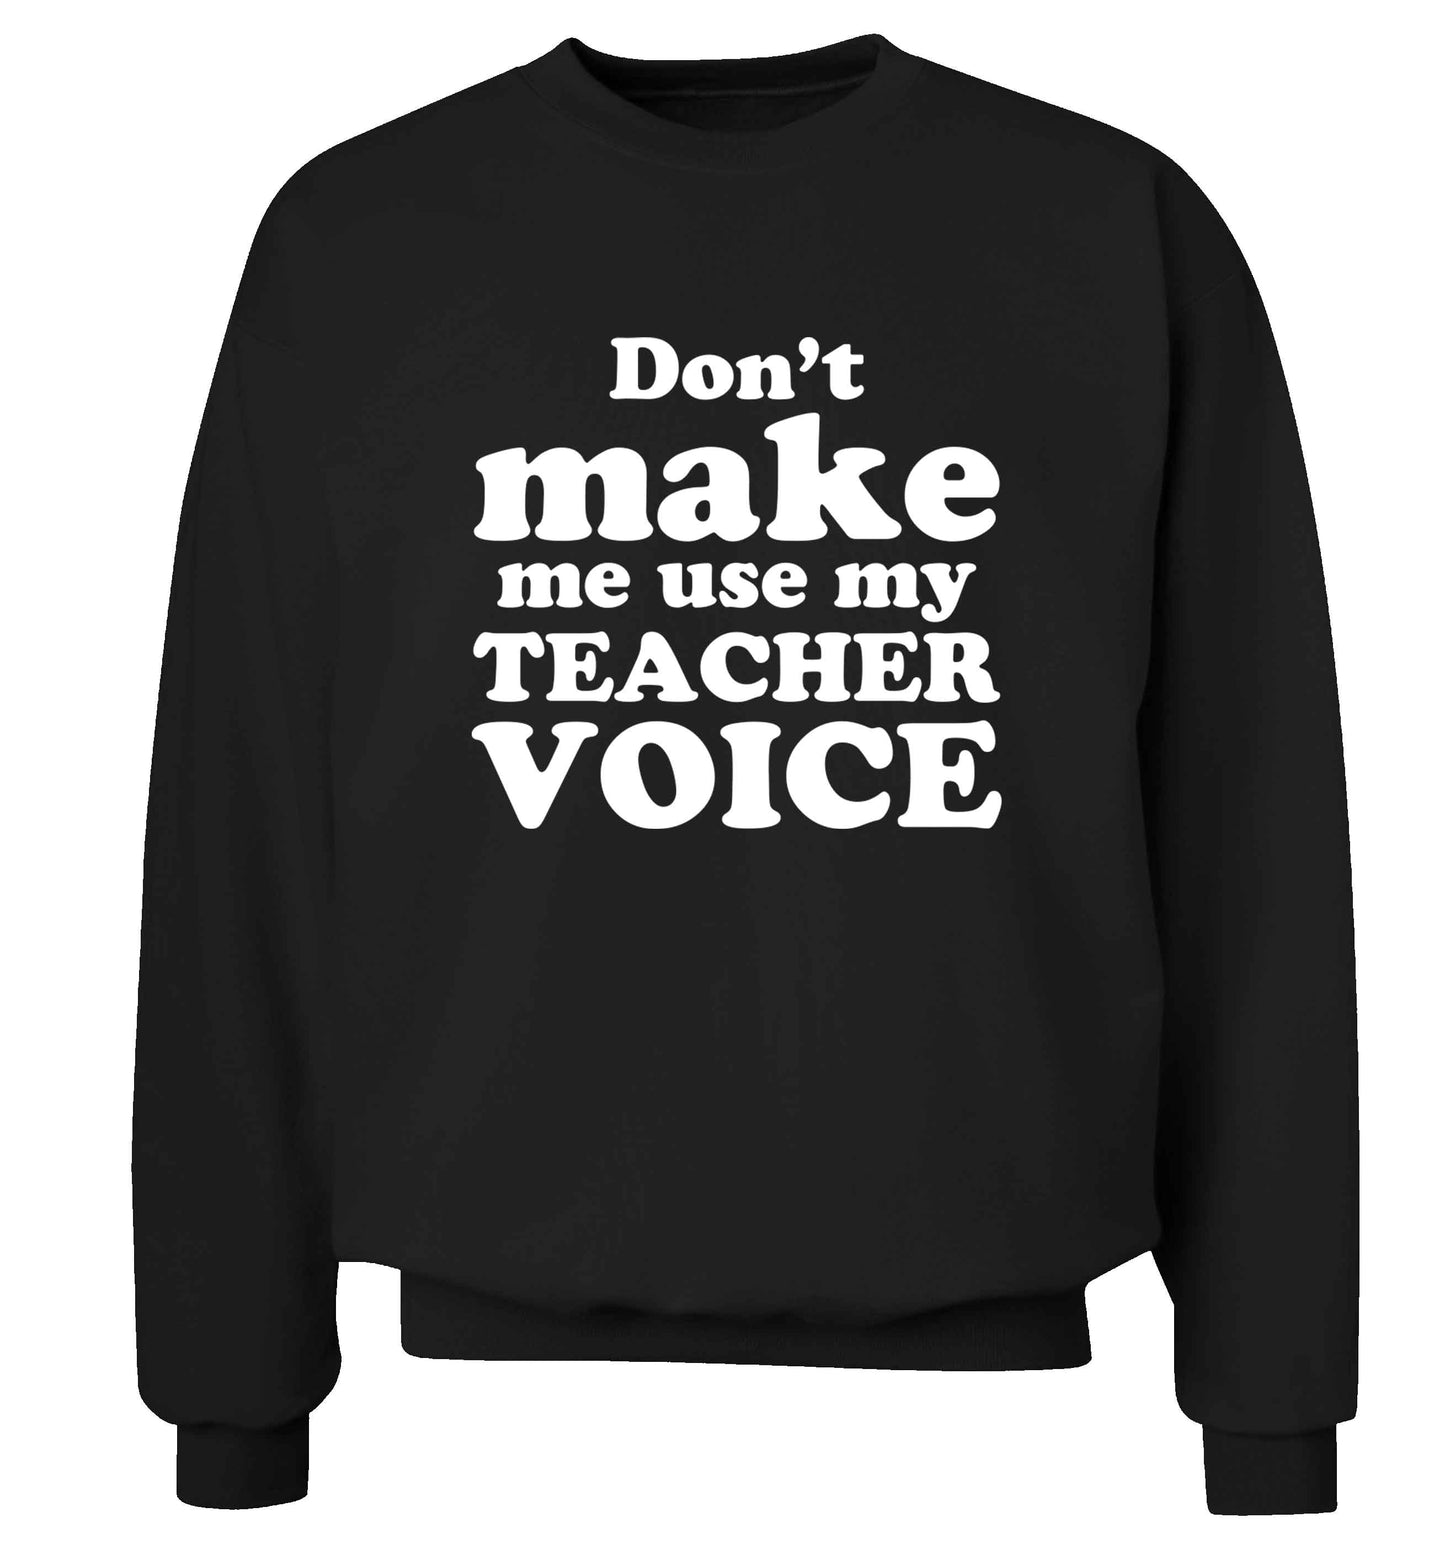 Don't make me use my teacher voice adult's unisex black sweater 2XL